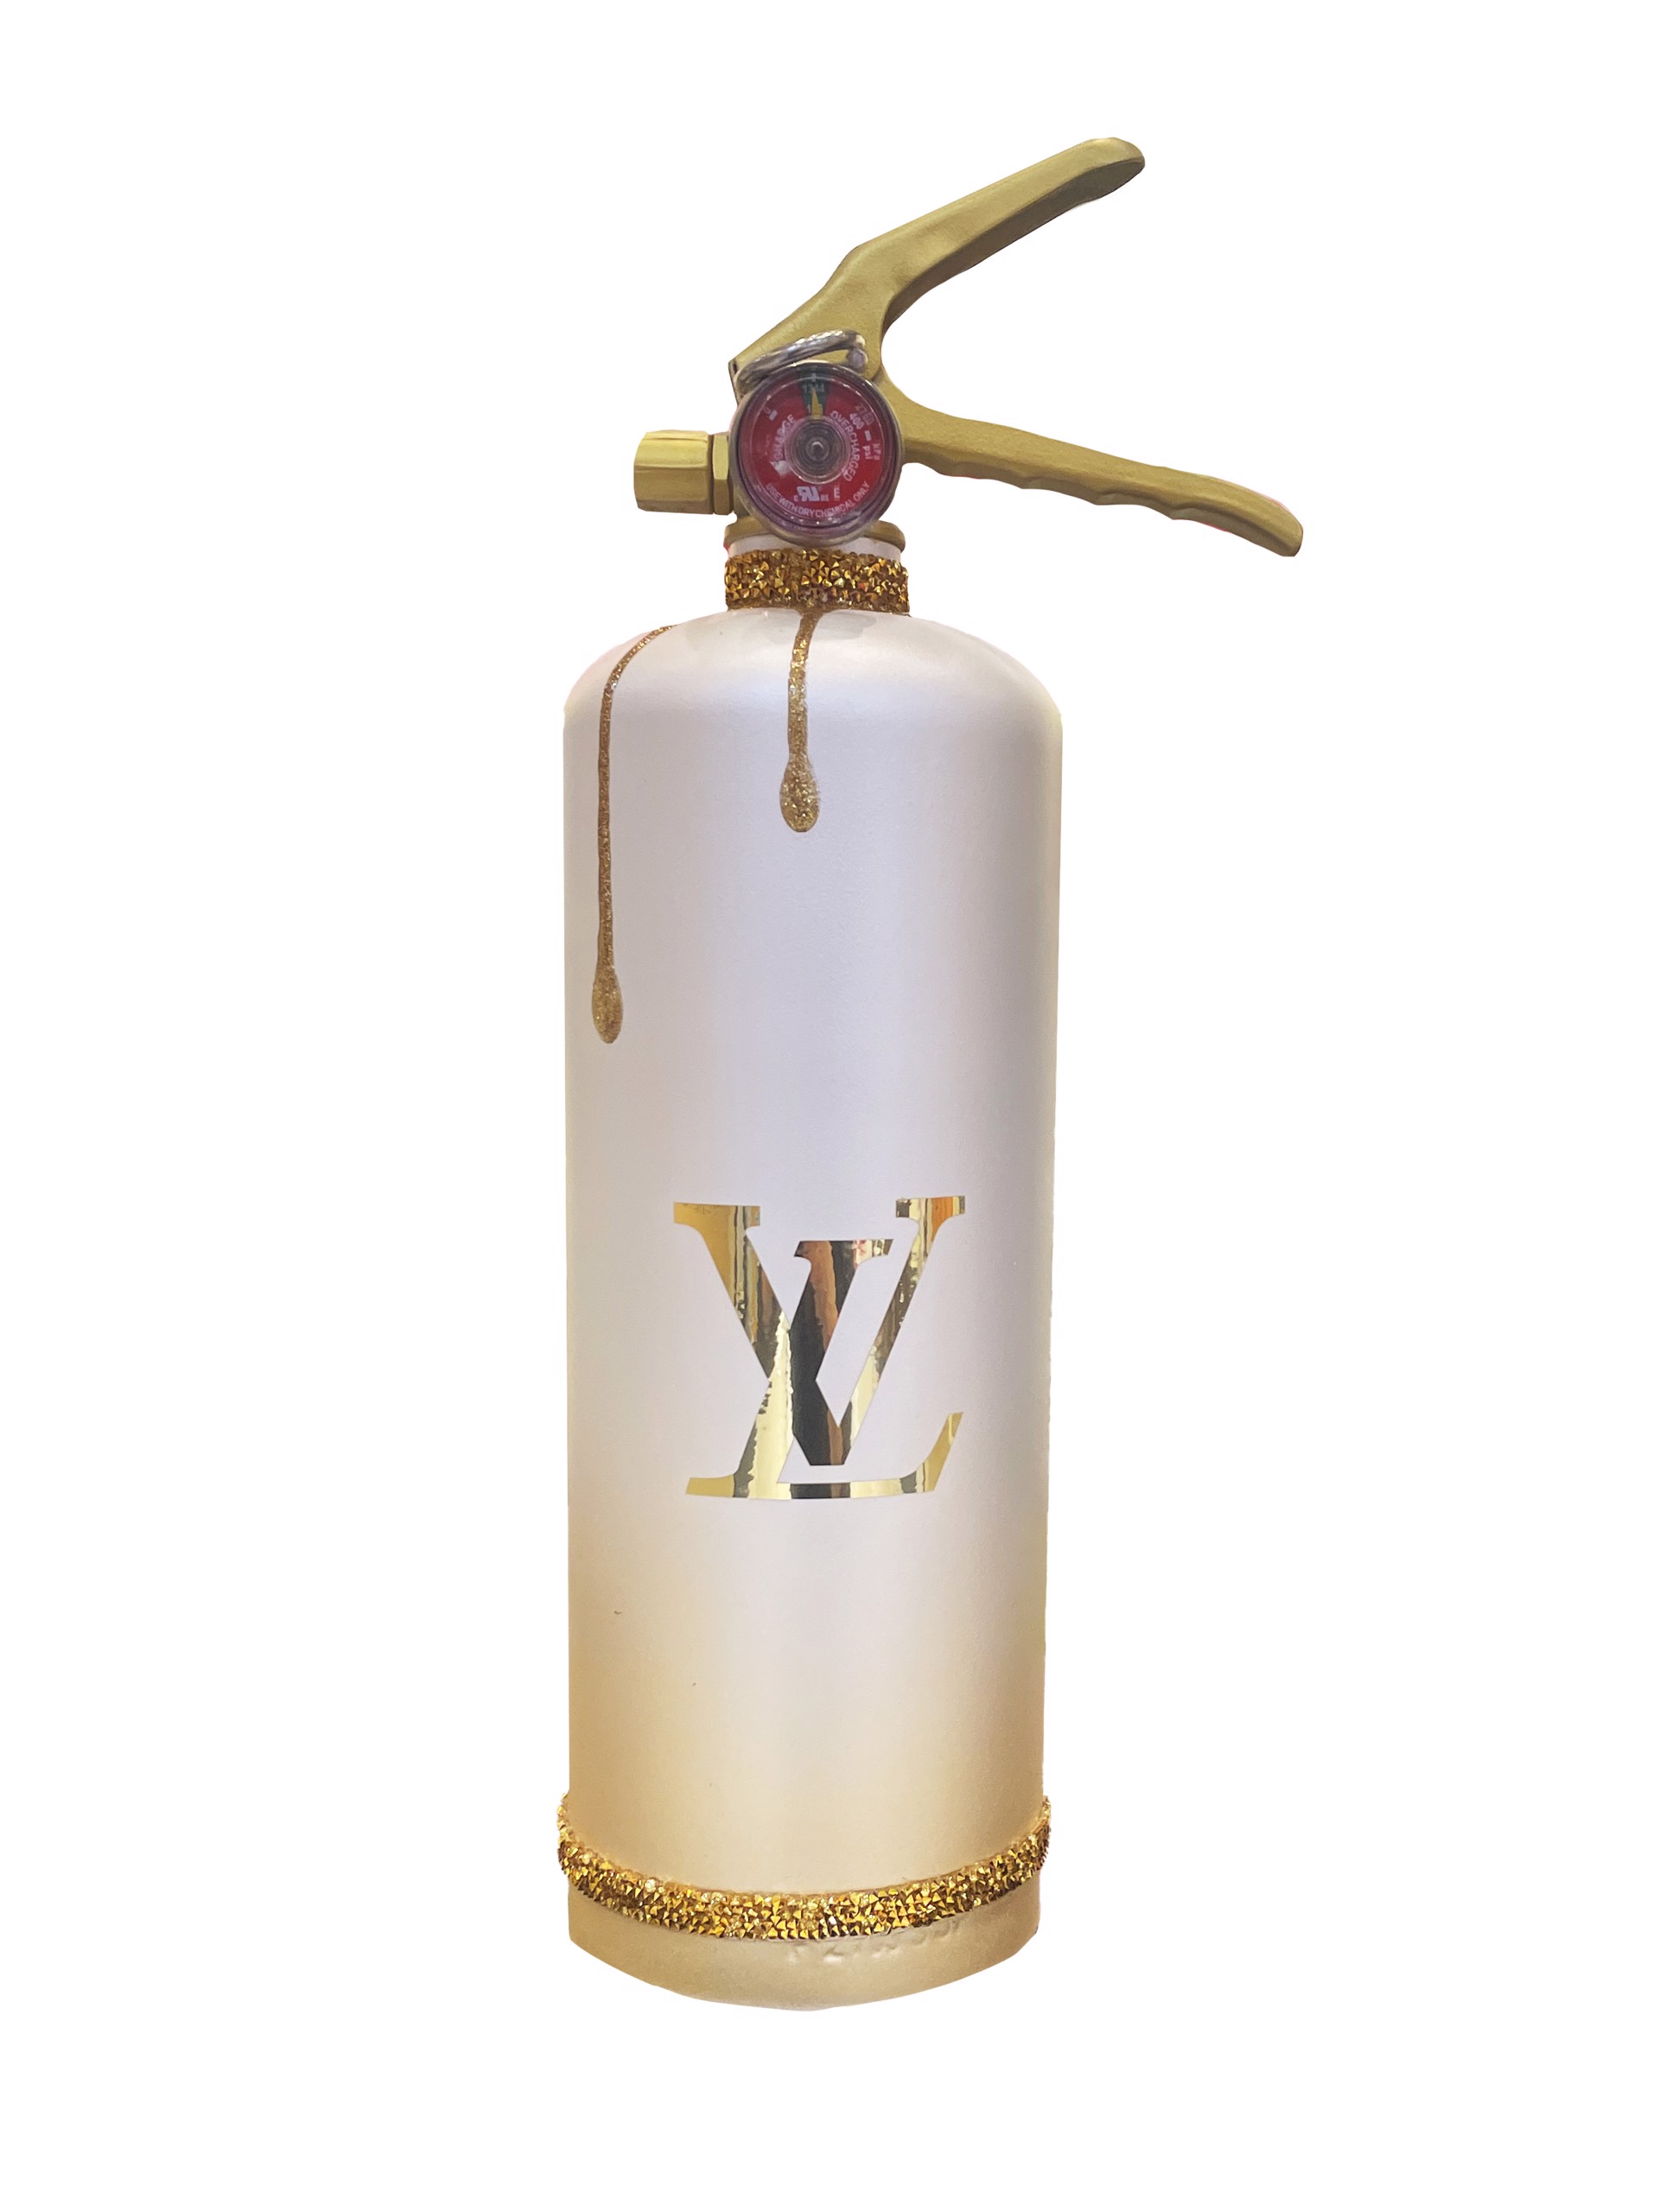 LV Fire Extinguisher by David Mir